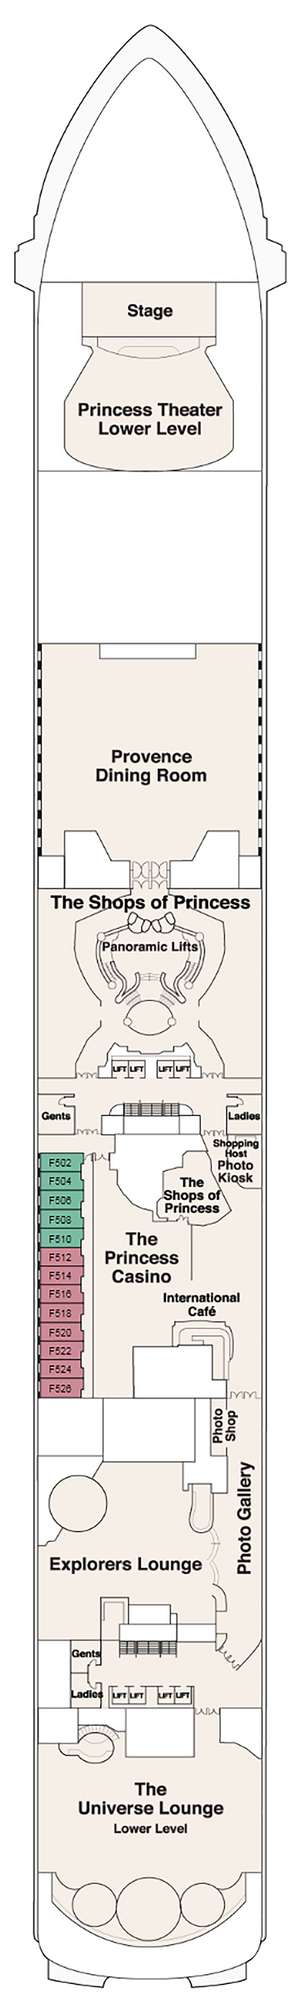 Deck plan for Coral Princess